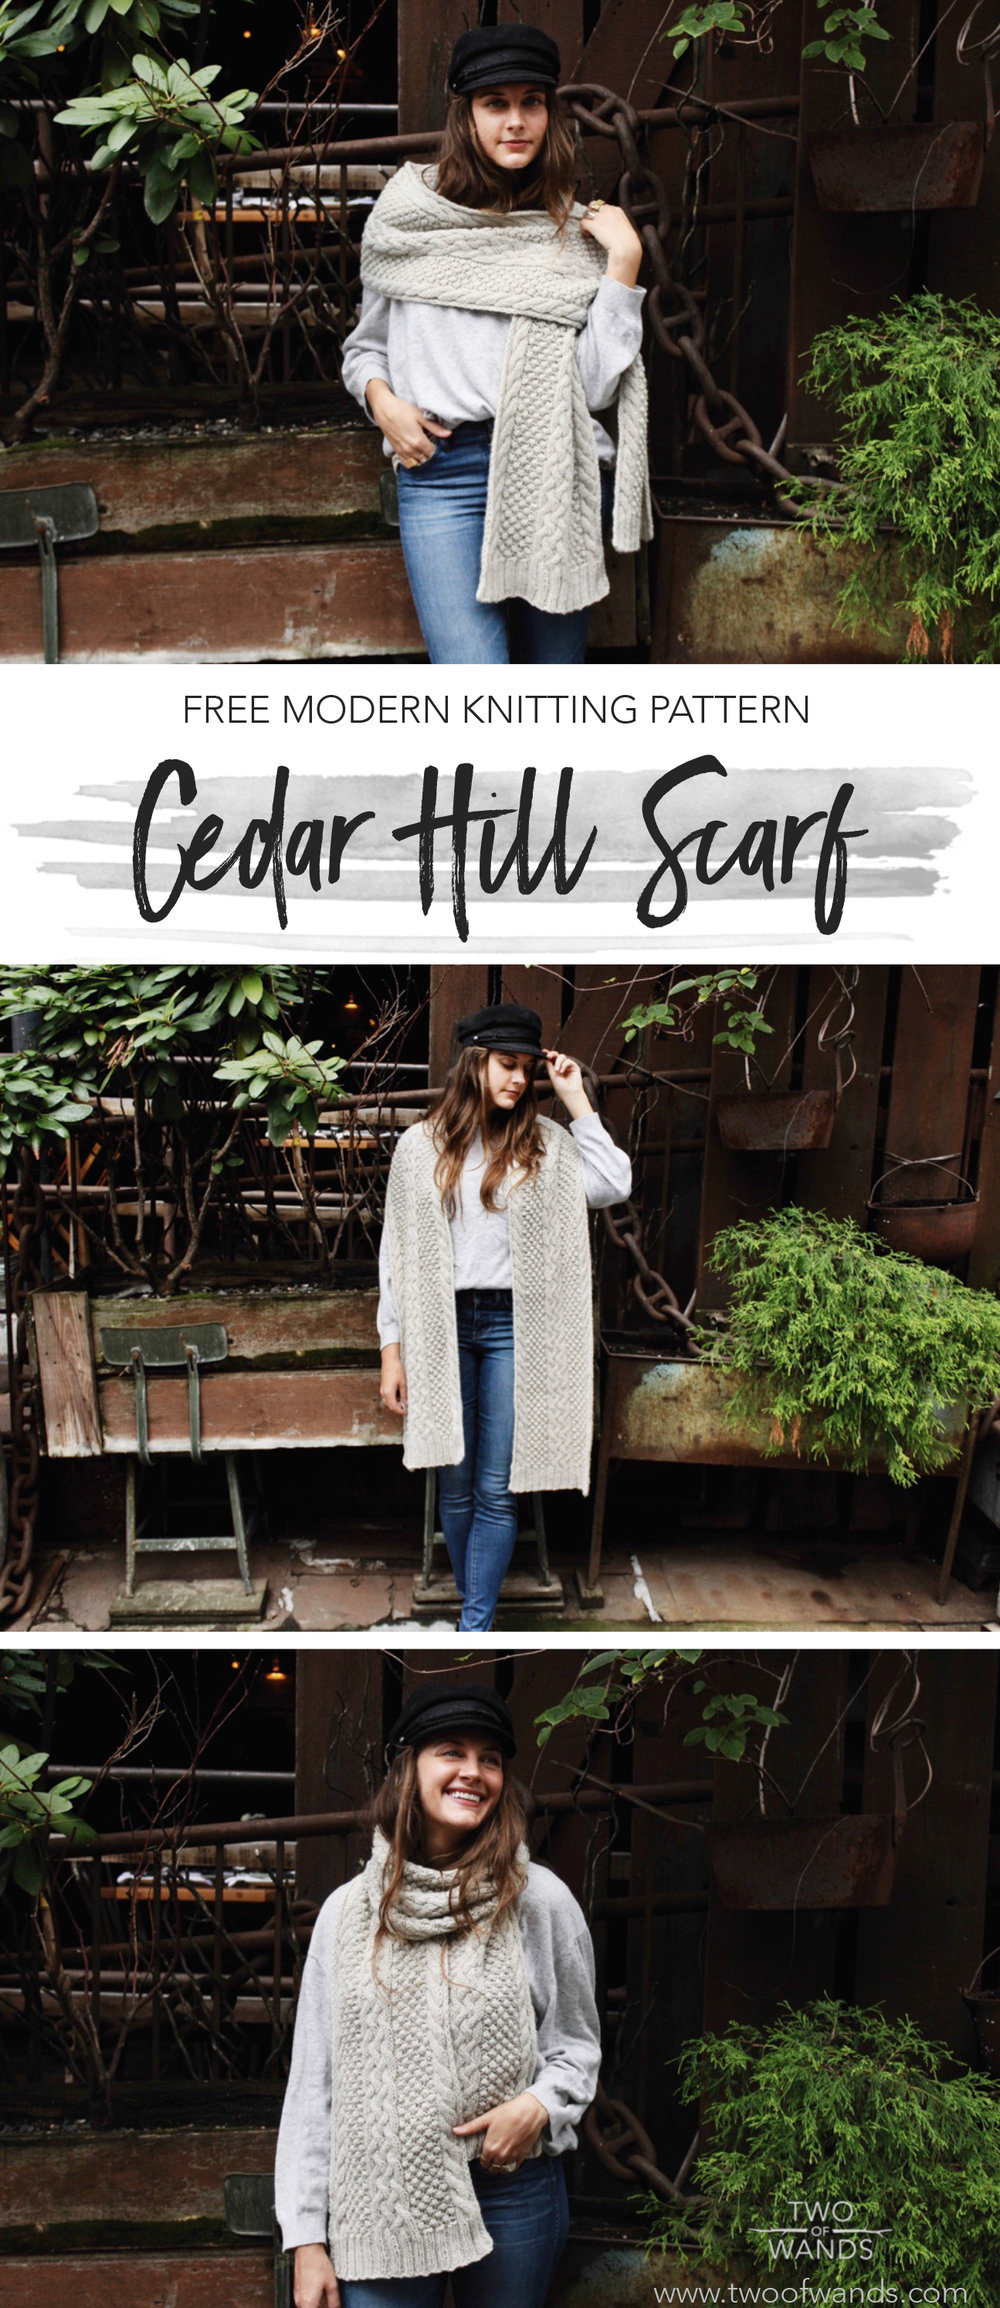 Cedar Hill Scarf pattern by Two of Wands